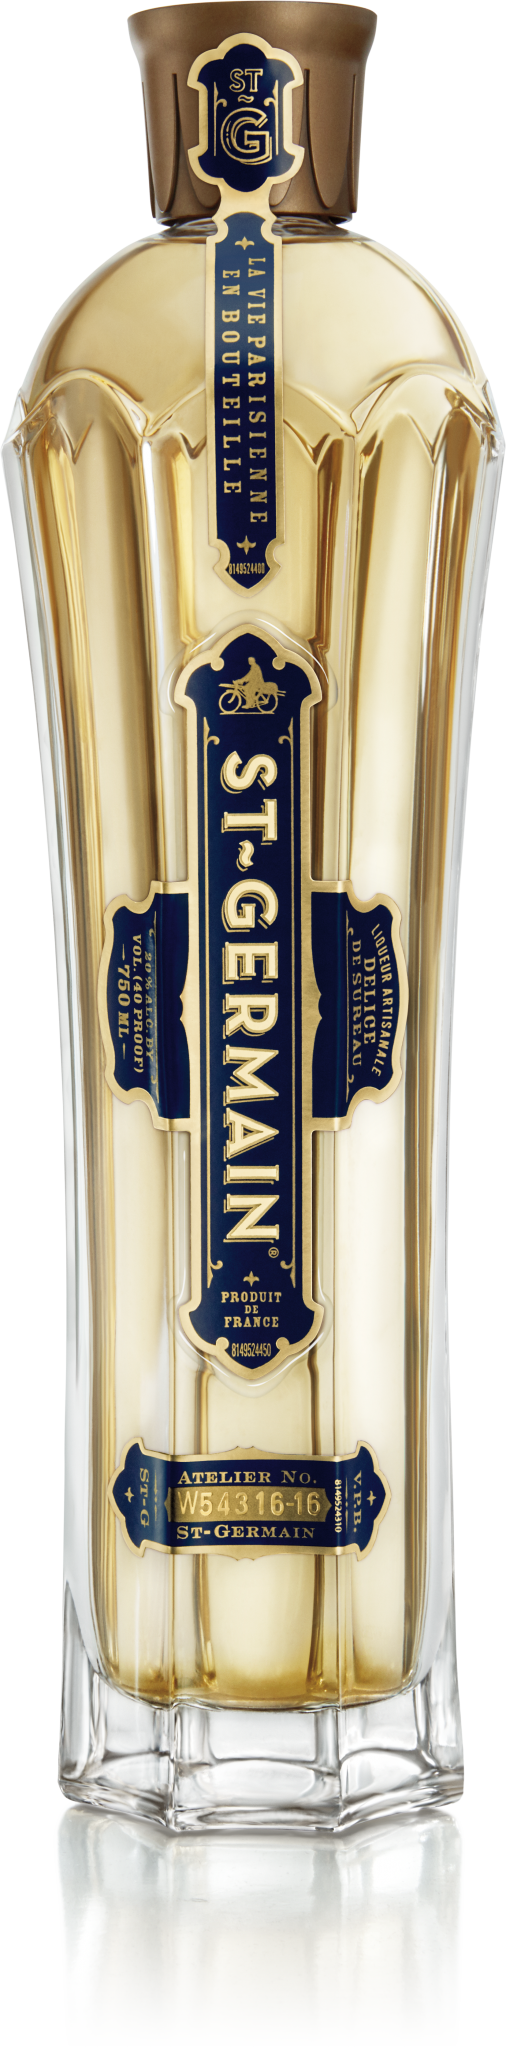 St. Germain Liqueur, 750 mL - Kroger